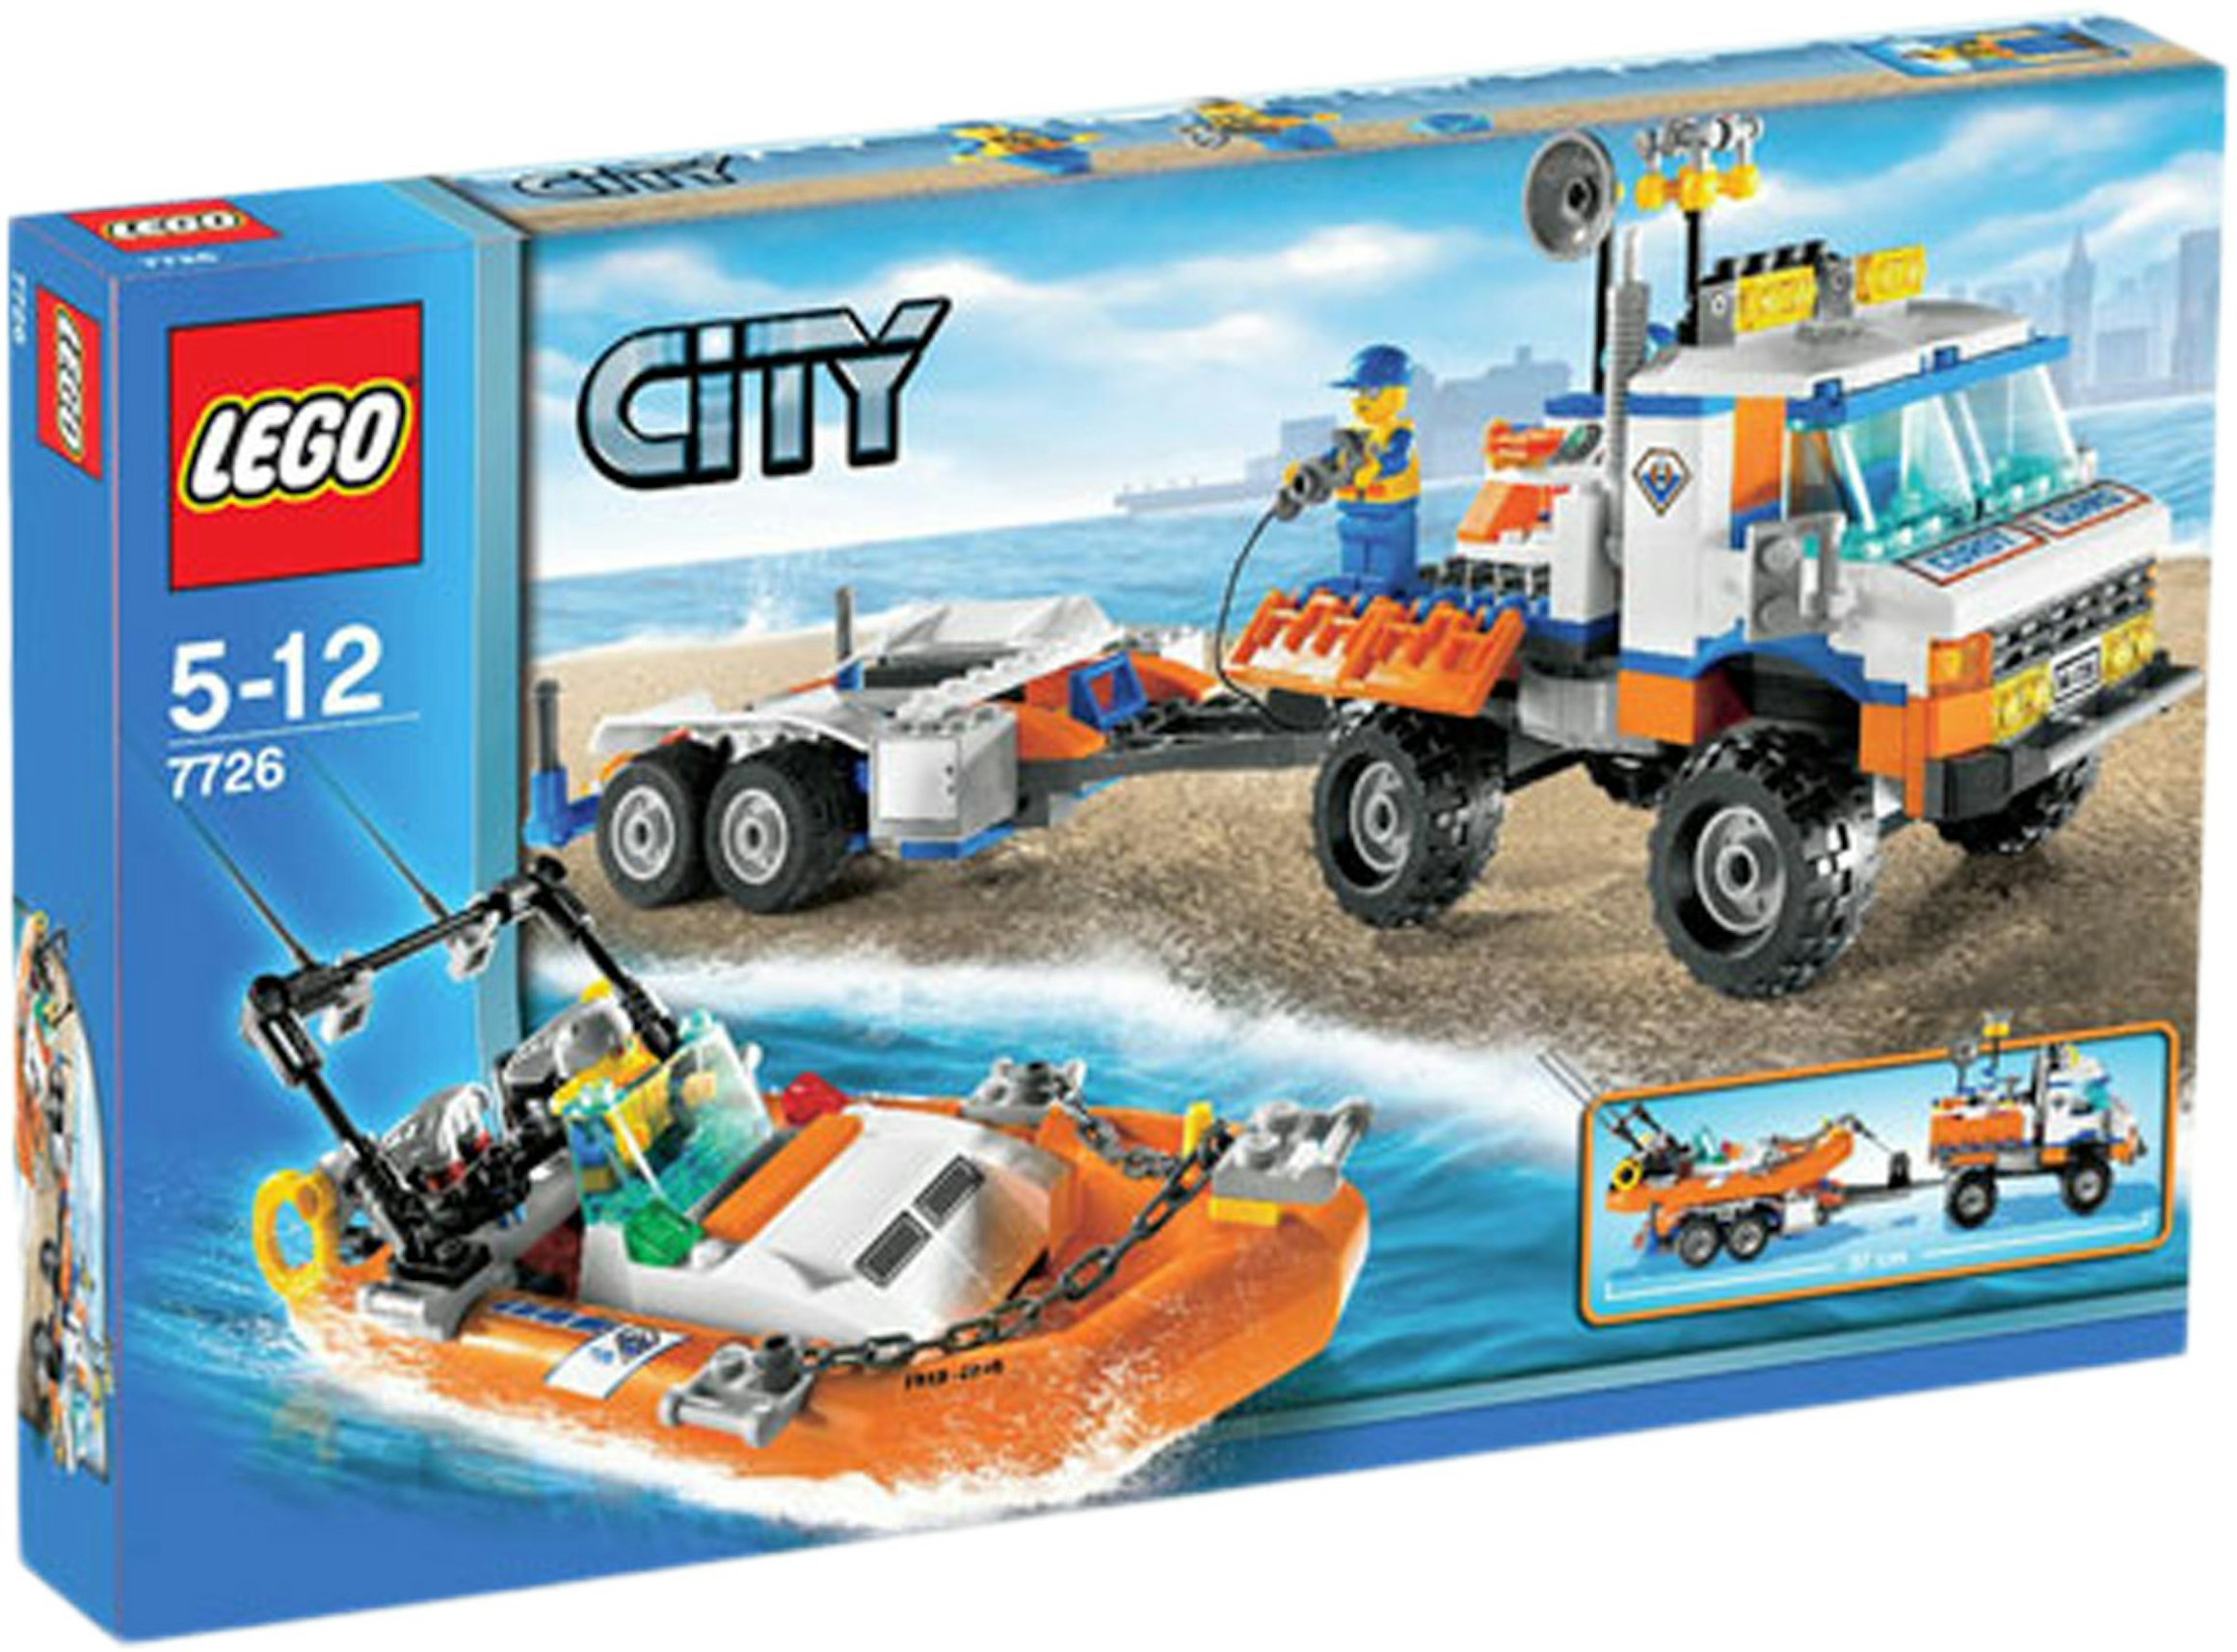 grænse samle piedestal LEGO City Coast Guard Truck with Speed Boat Set 7726 - US